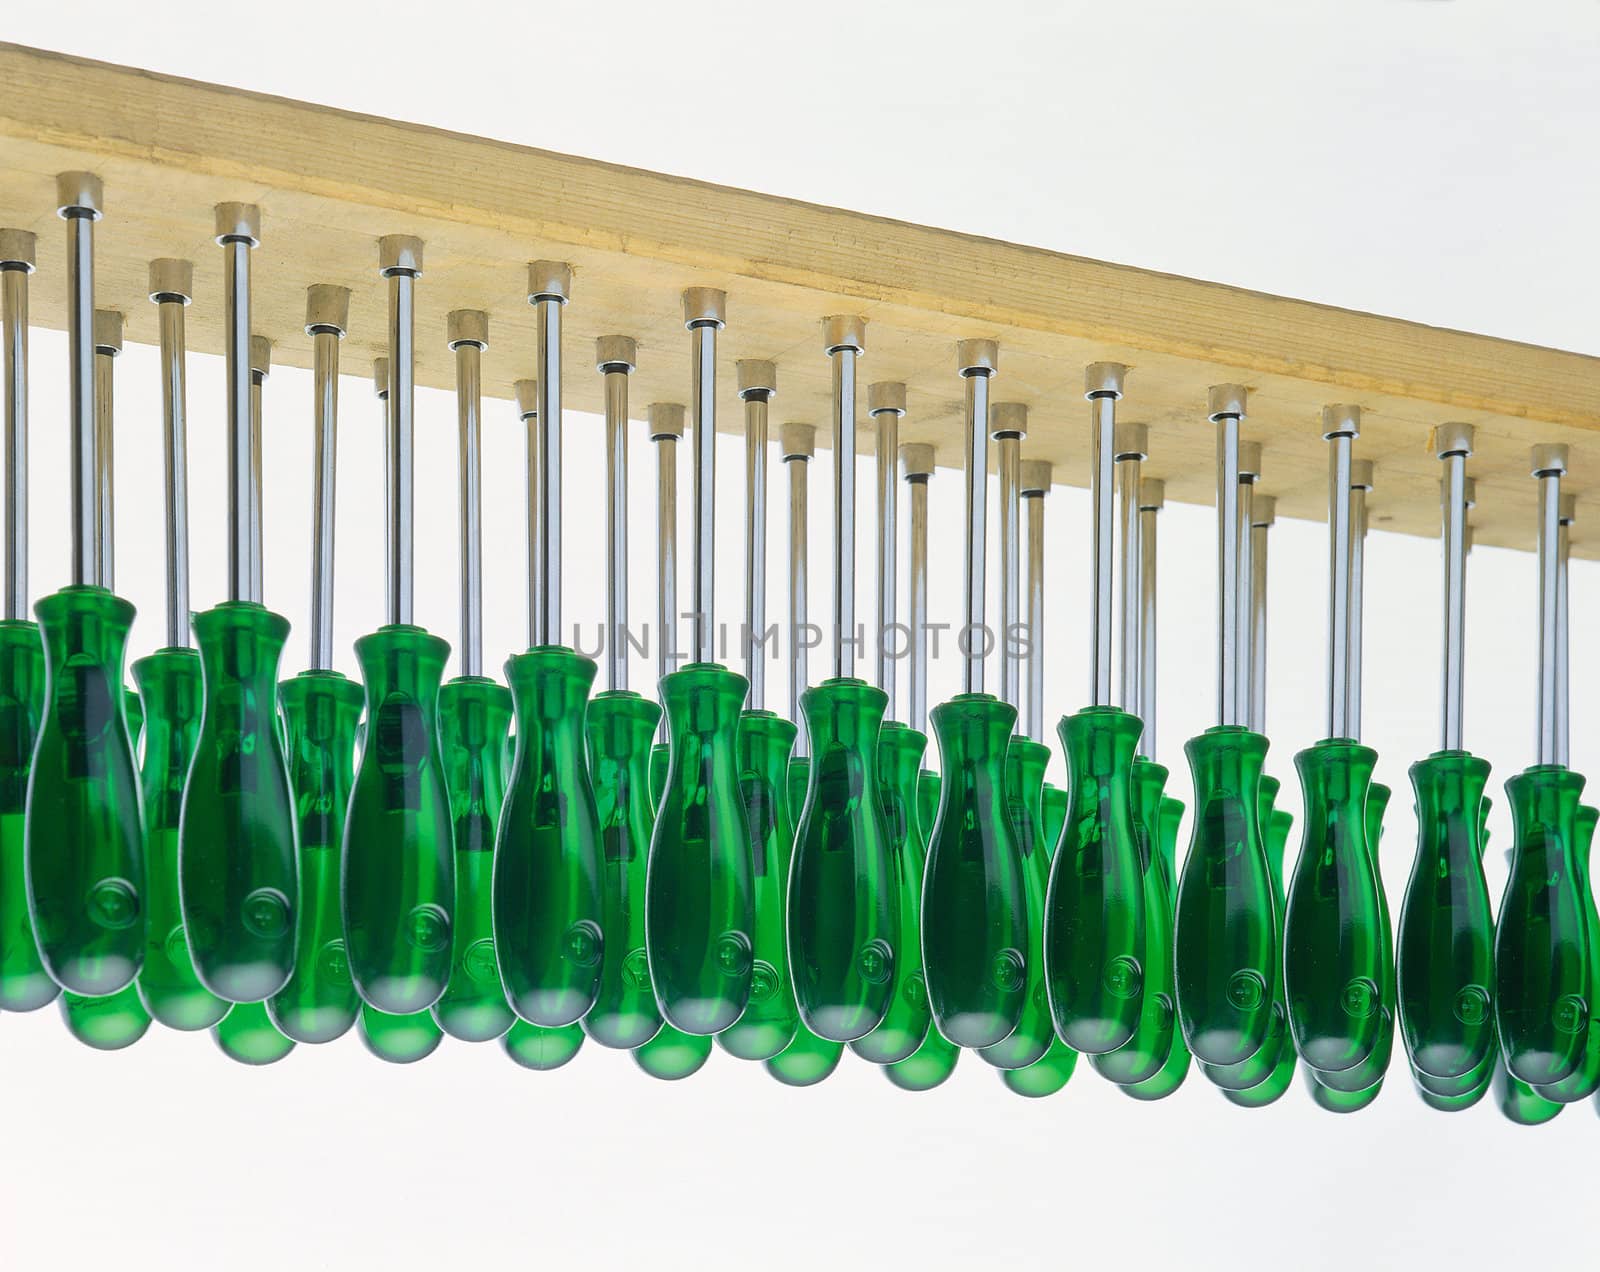 Set of screwdrivers by hanusst